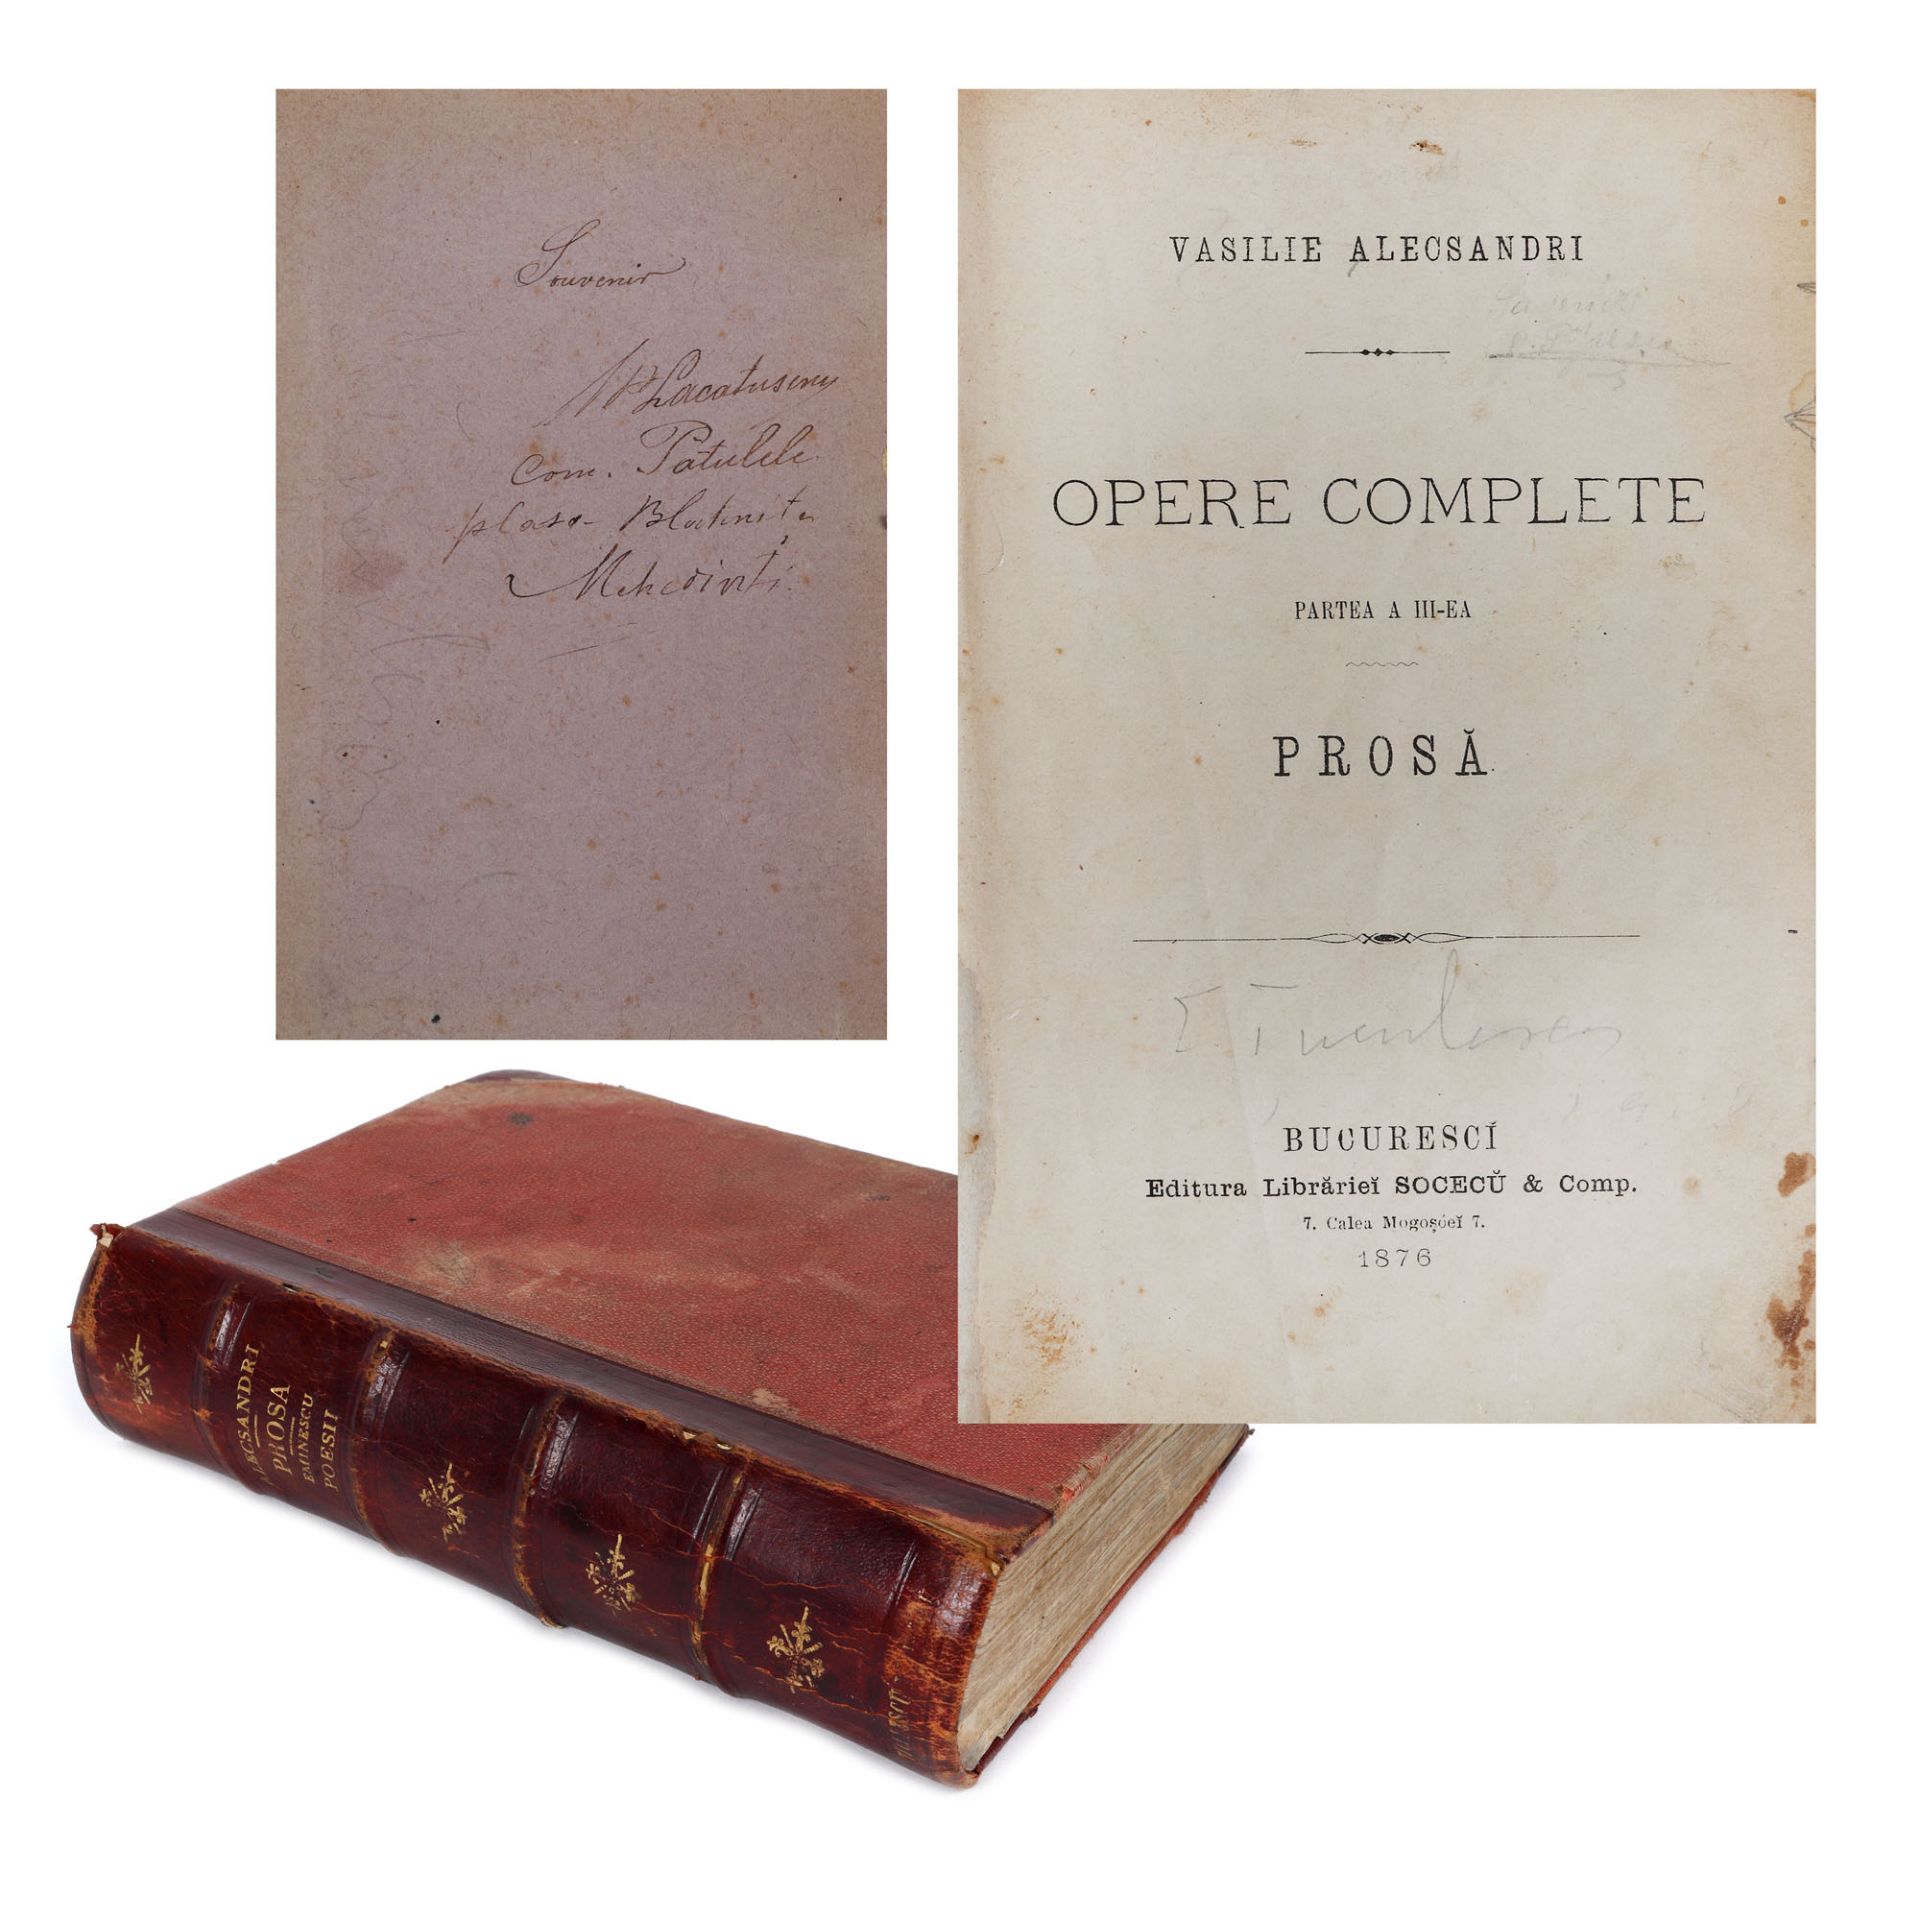 Colligatum "Opere complete partea a III-a", by Vasile Alecsandri, editio princeps, Bucharest, 1879,